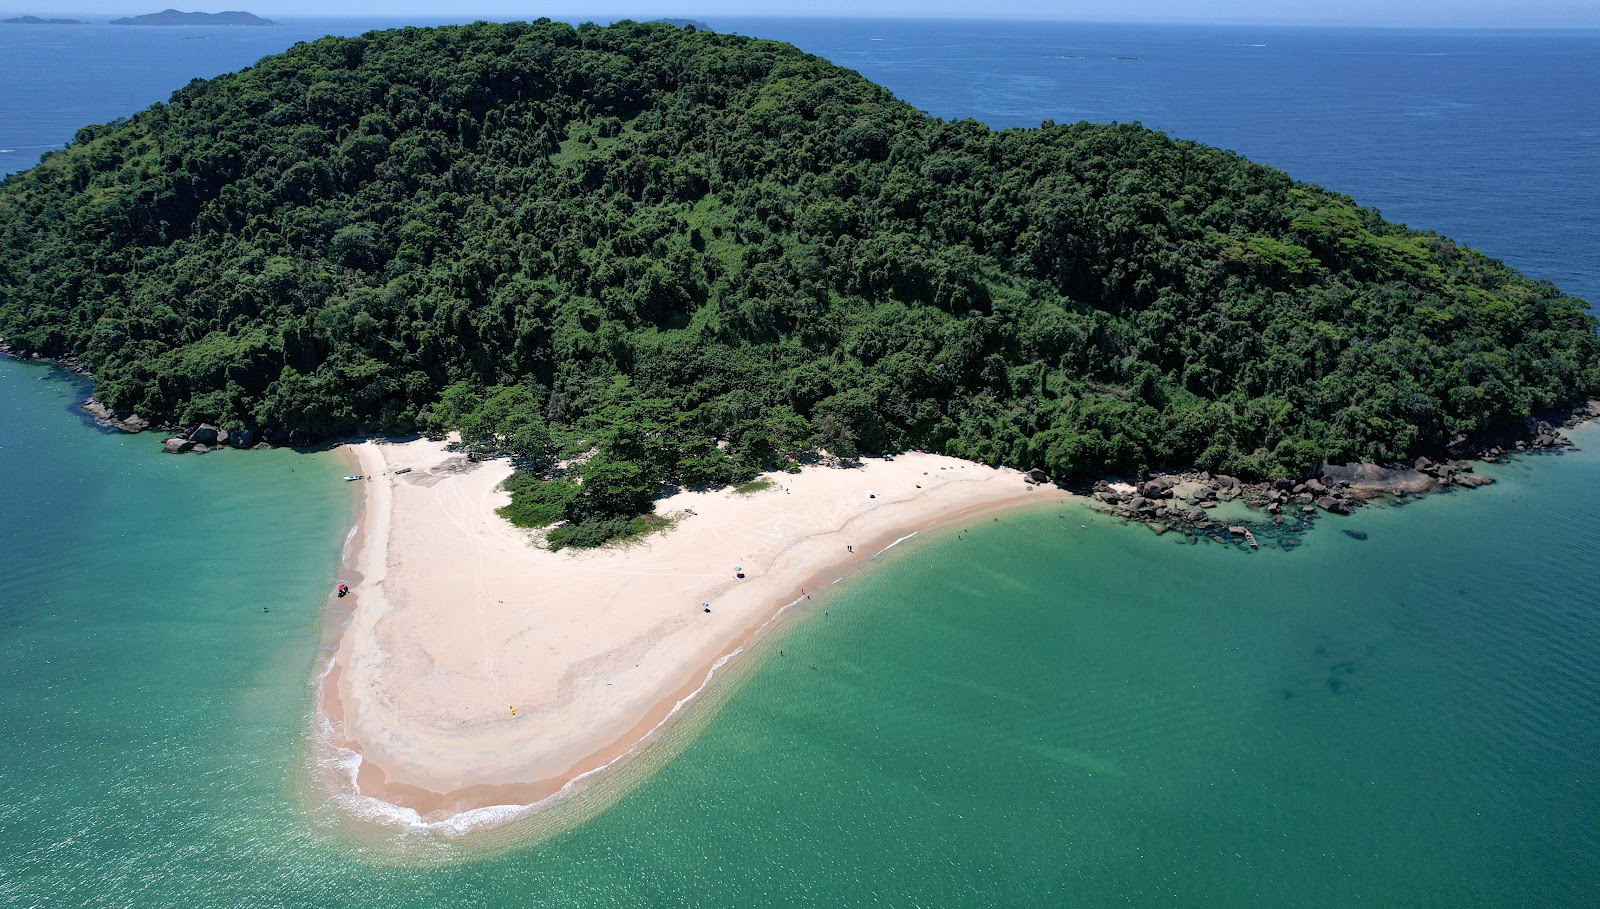 Photo of Ilha do Prumirim Beach with spacious shore